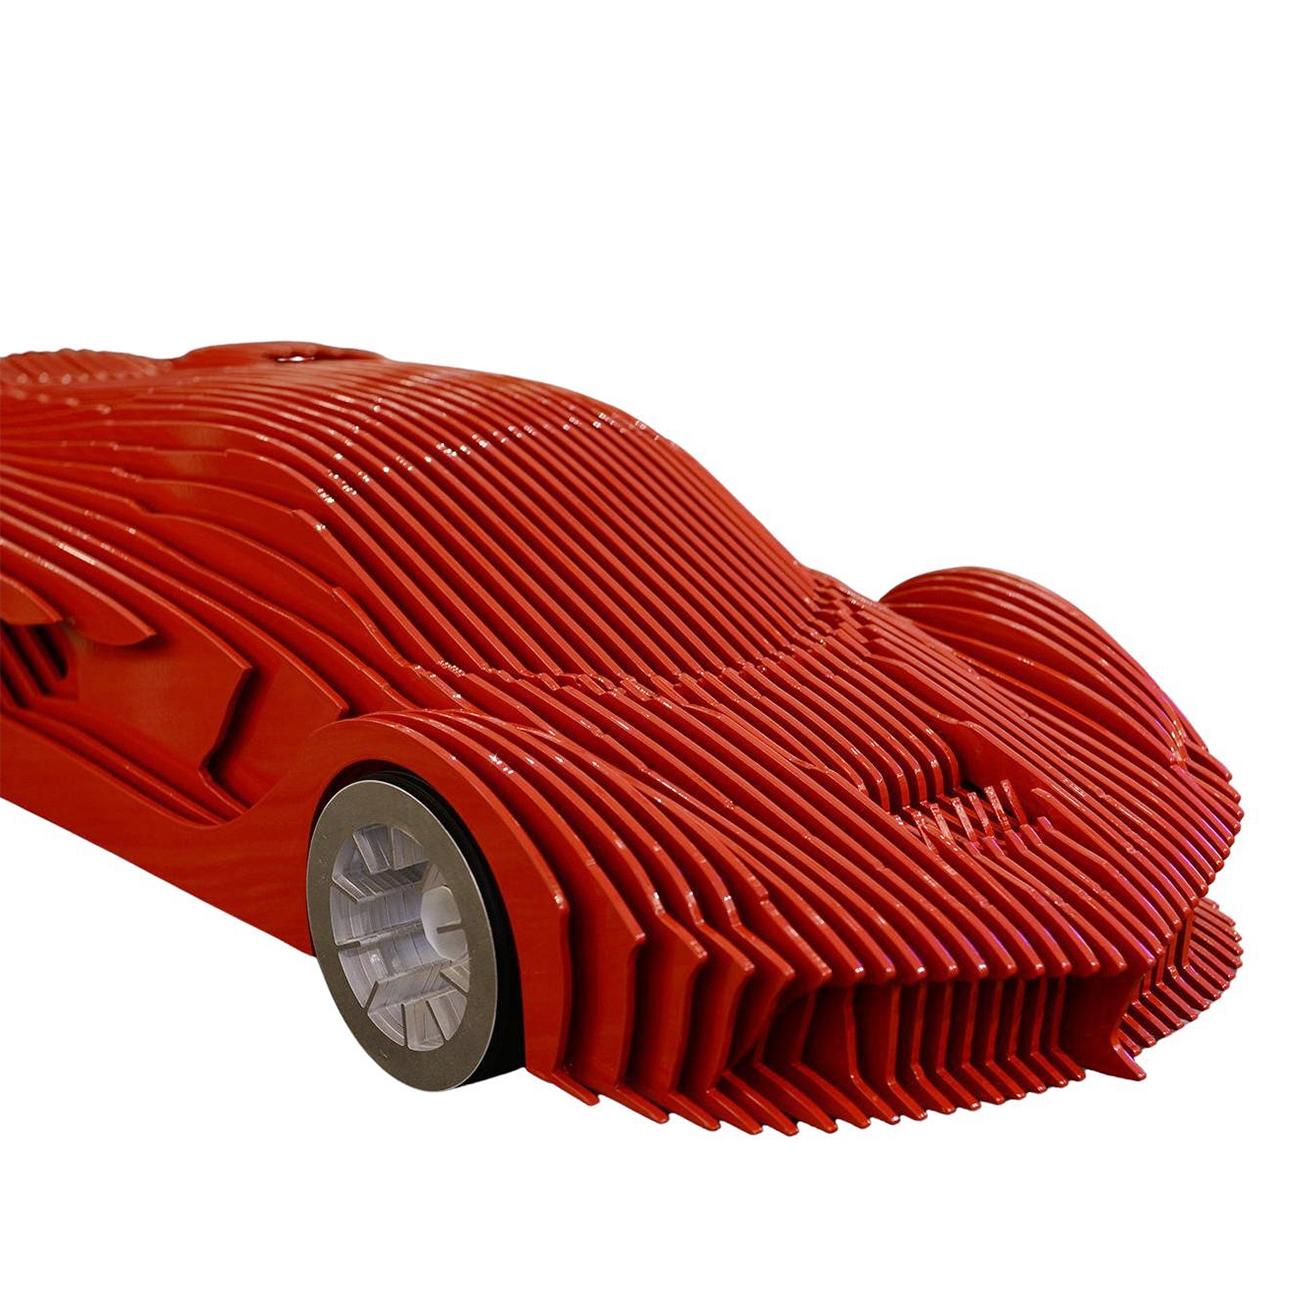 Aluminum La Ferrari Sculpture For Sale